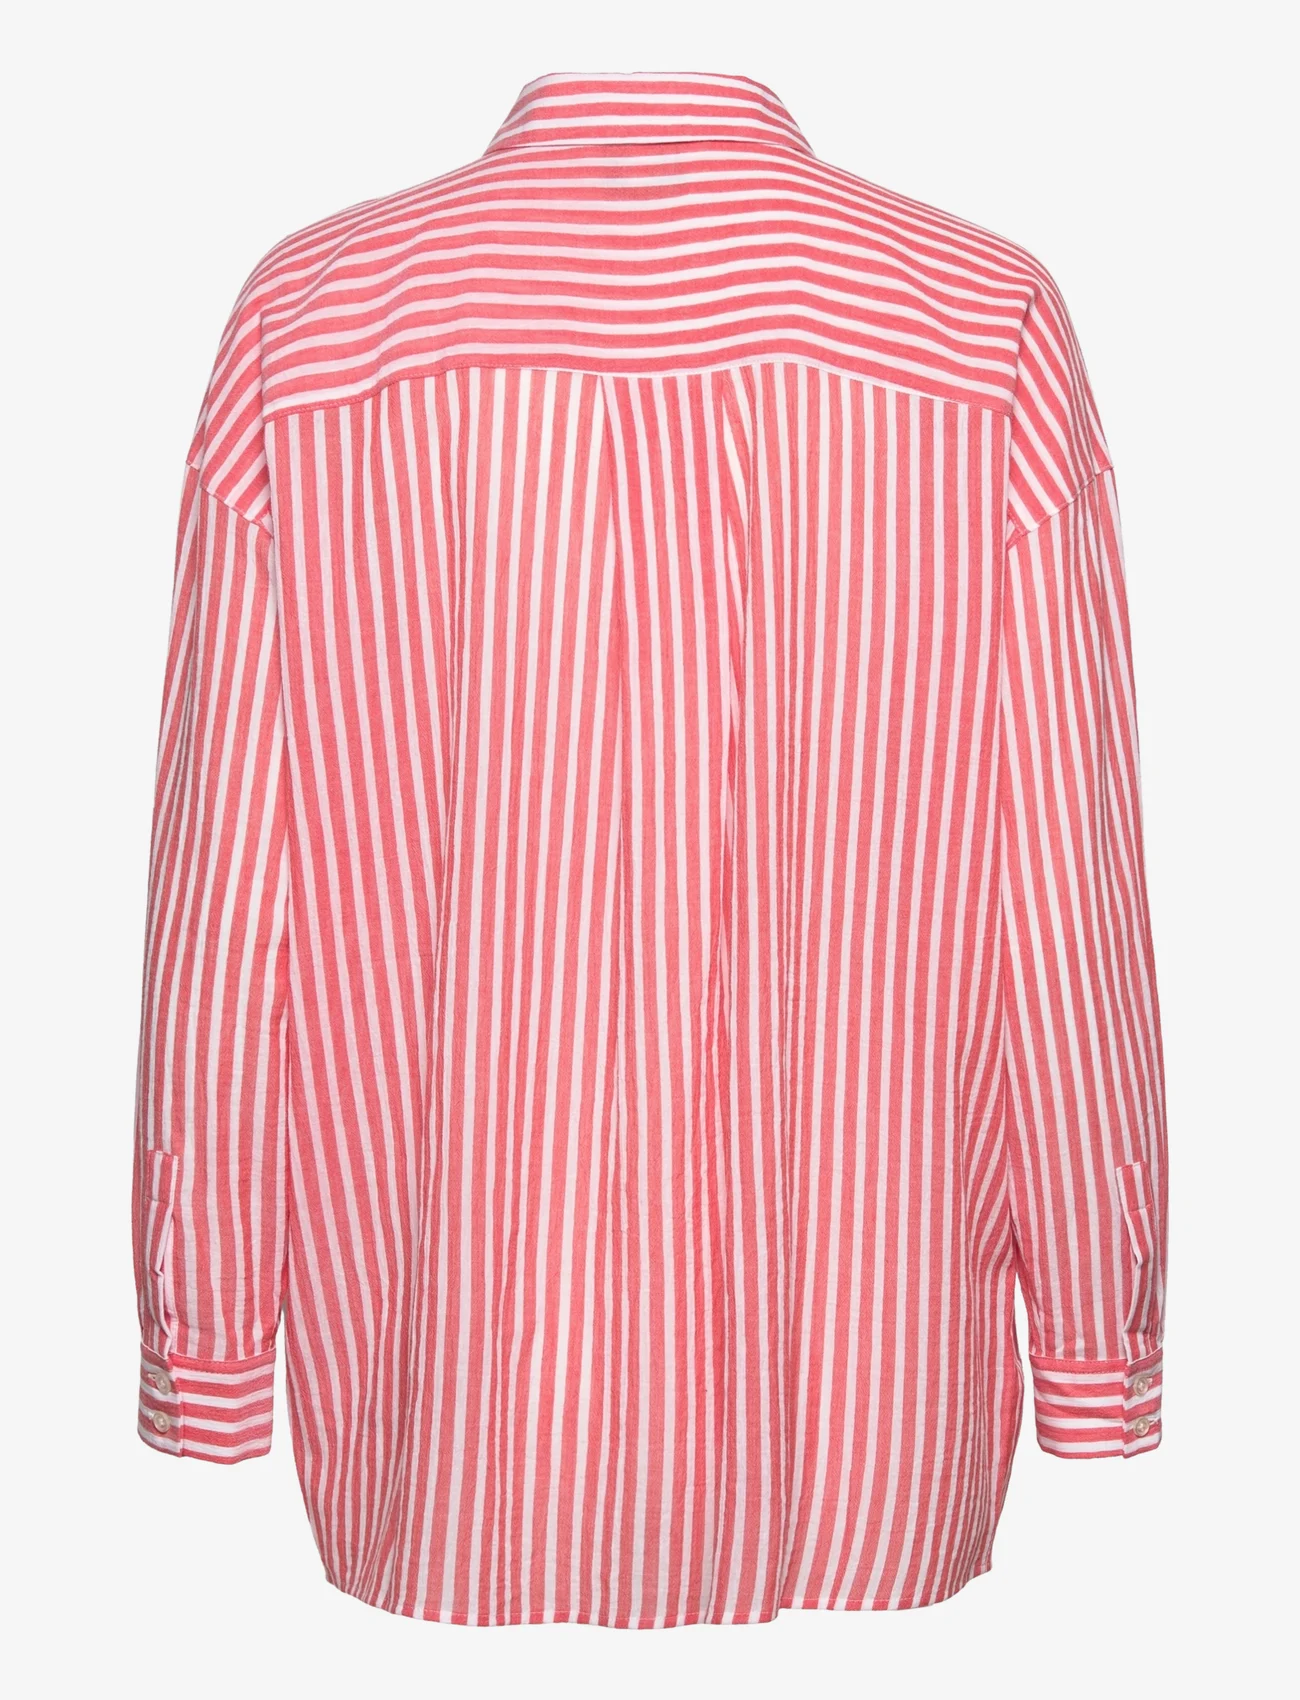 Just Female - Ocean shirt - cherry tomato - 1